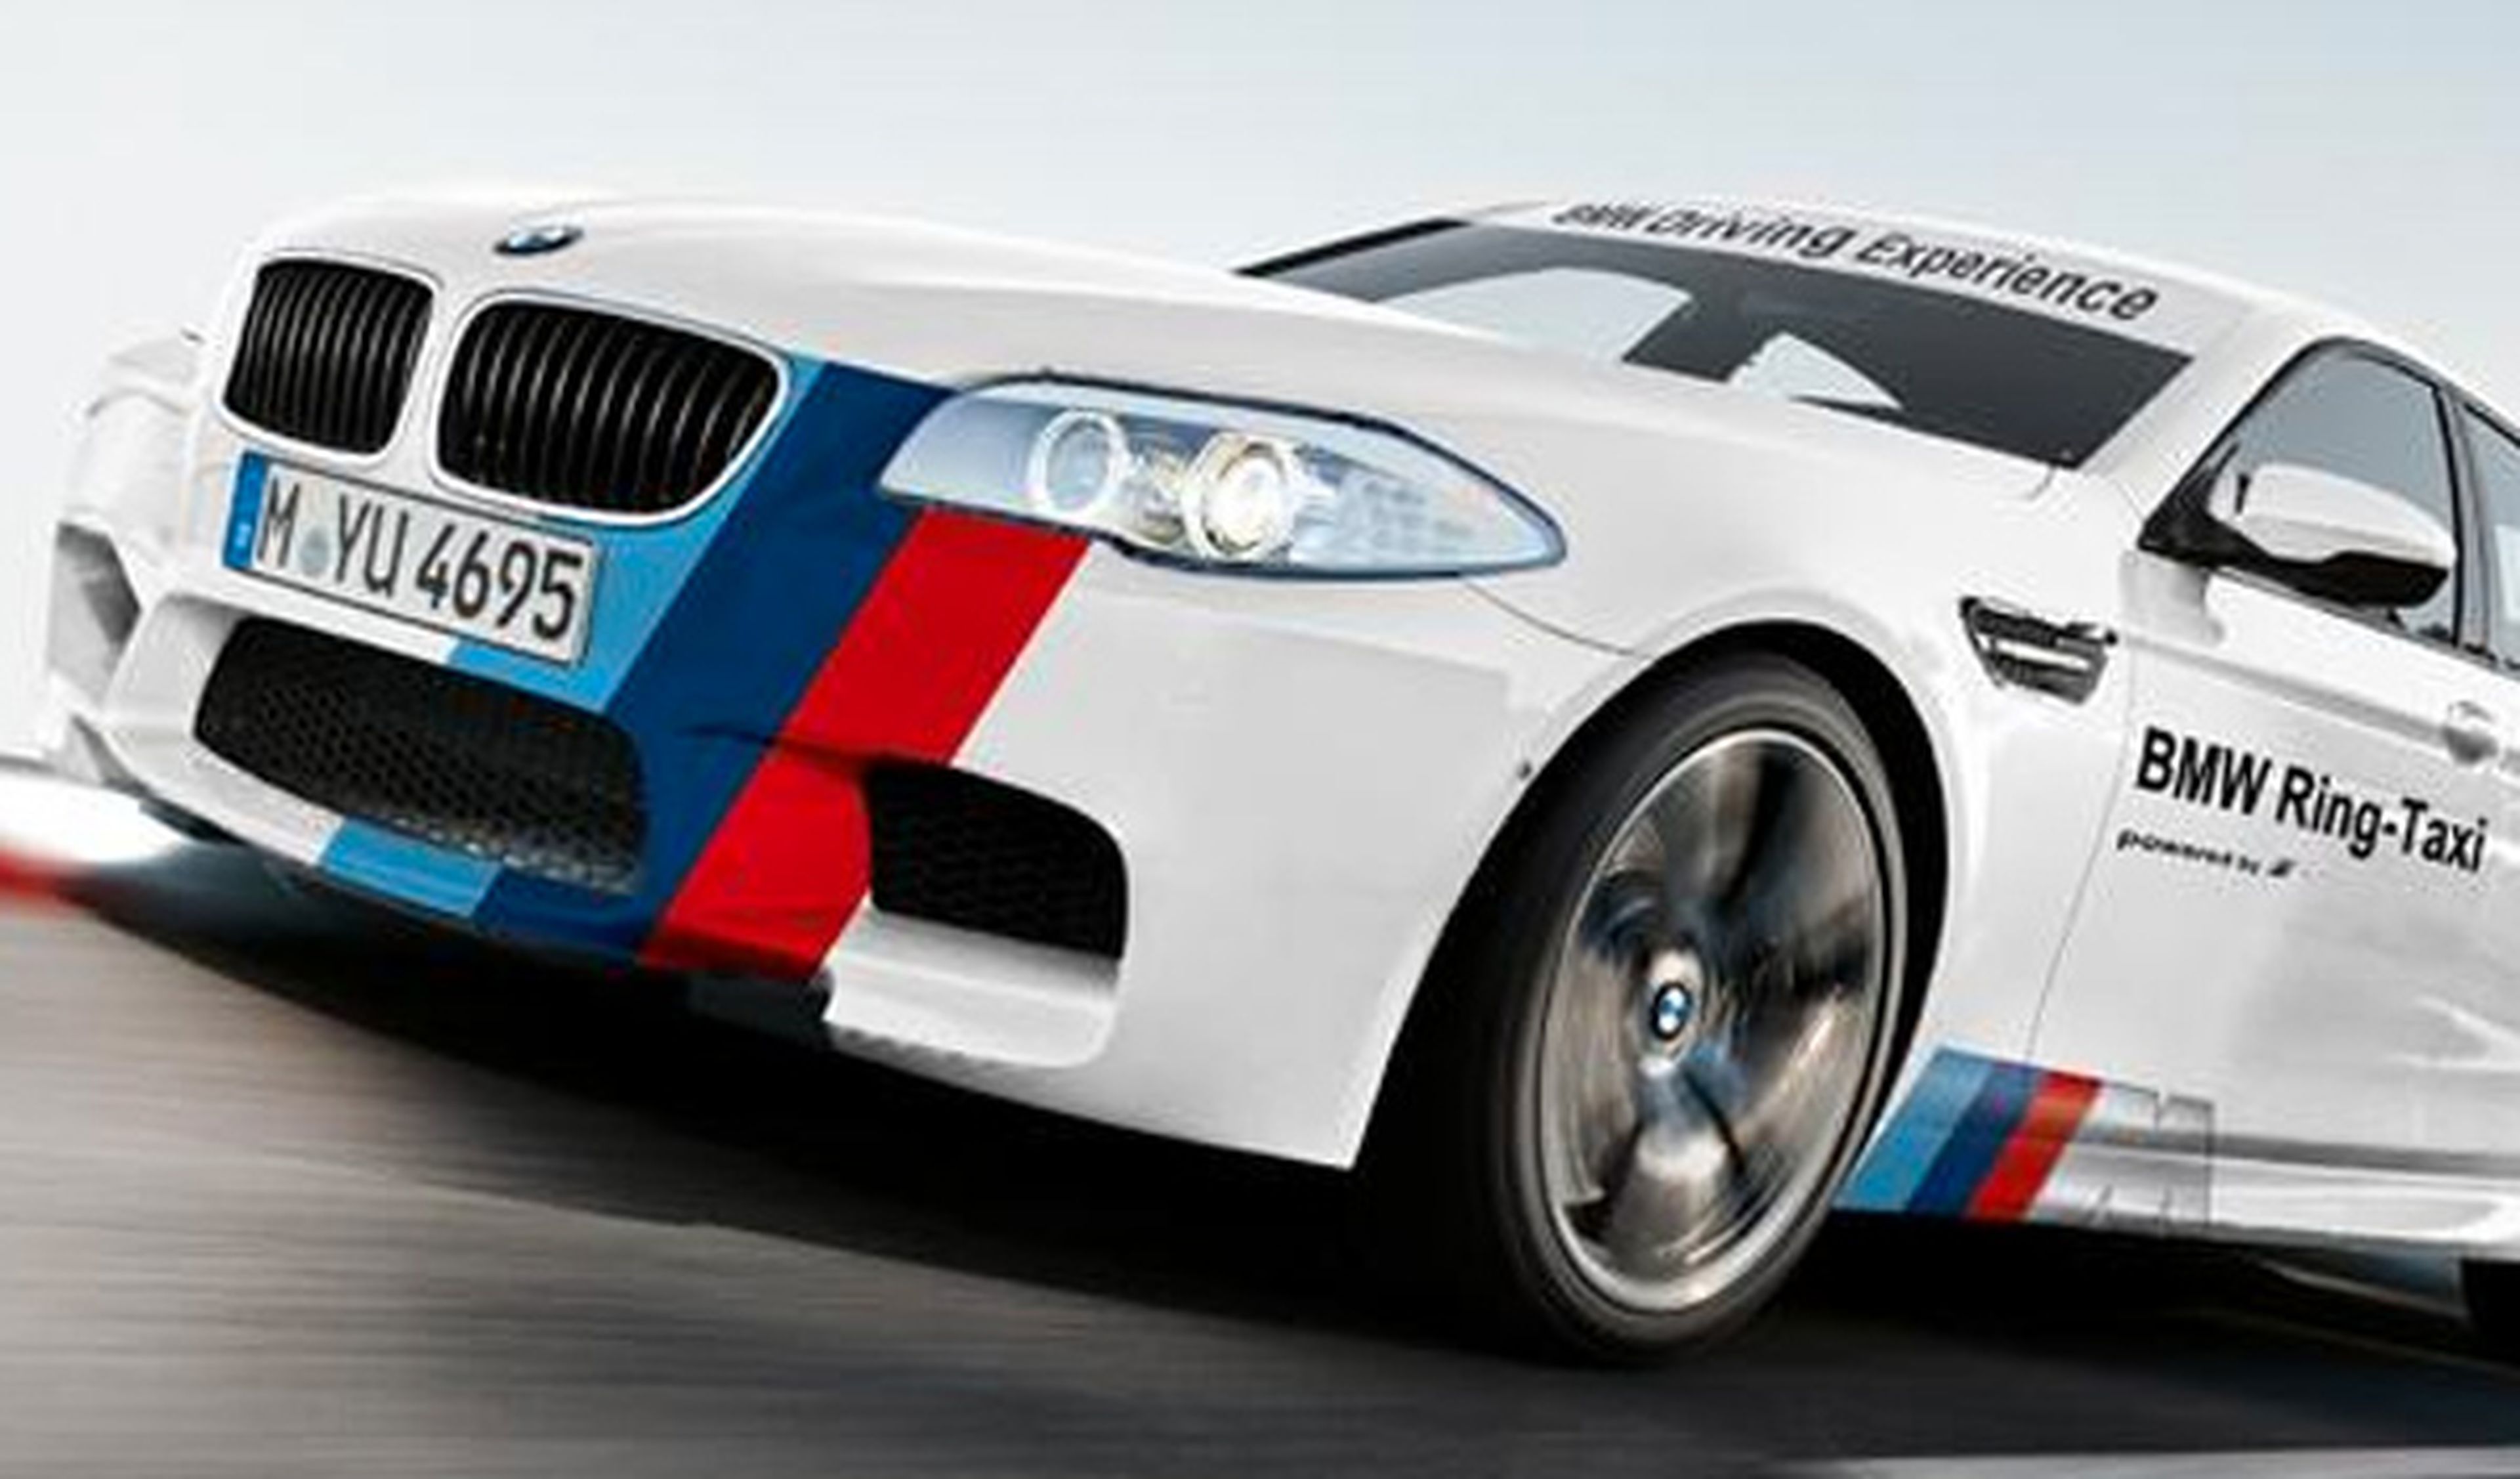 El BMW M5 2013 Ring-Taxi llega a Nürburgring